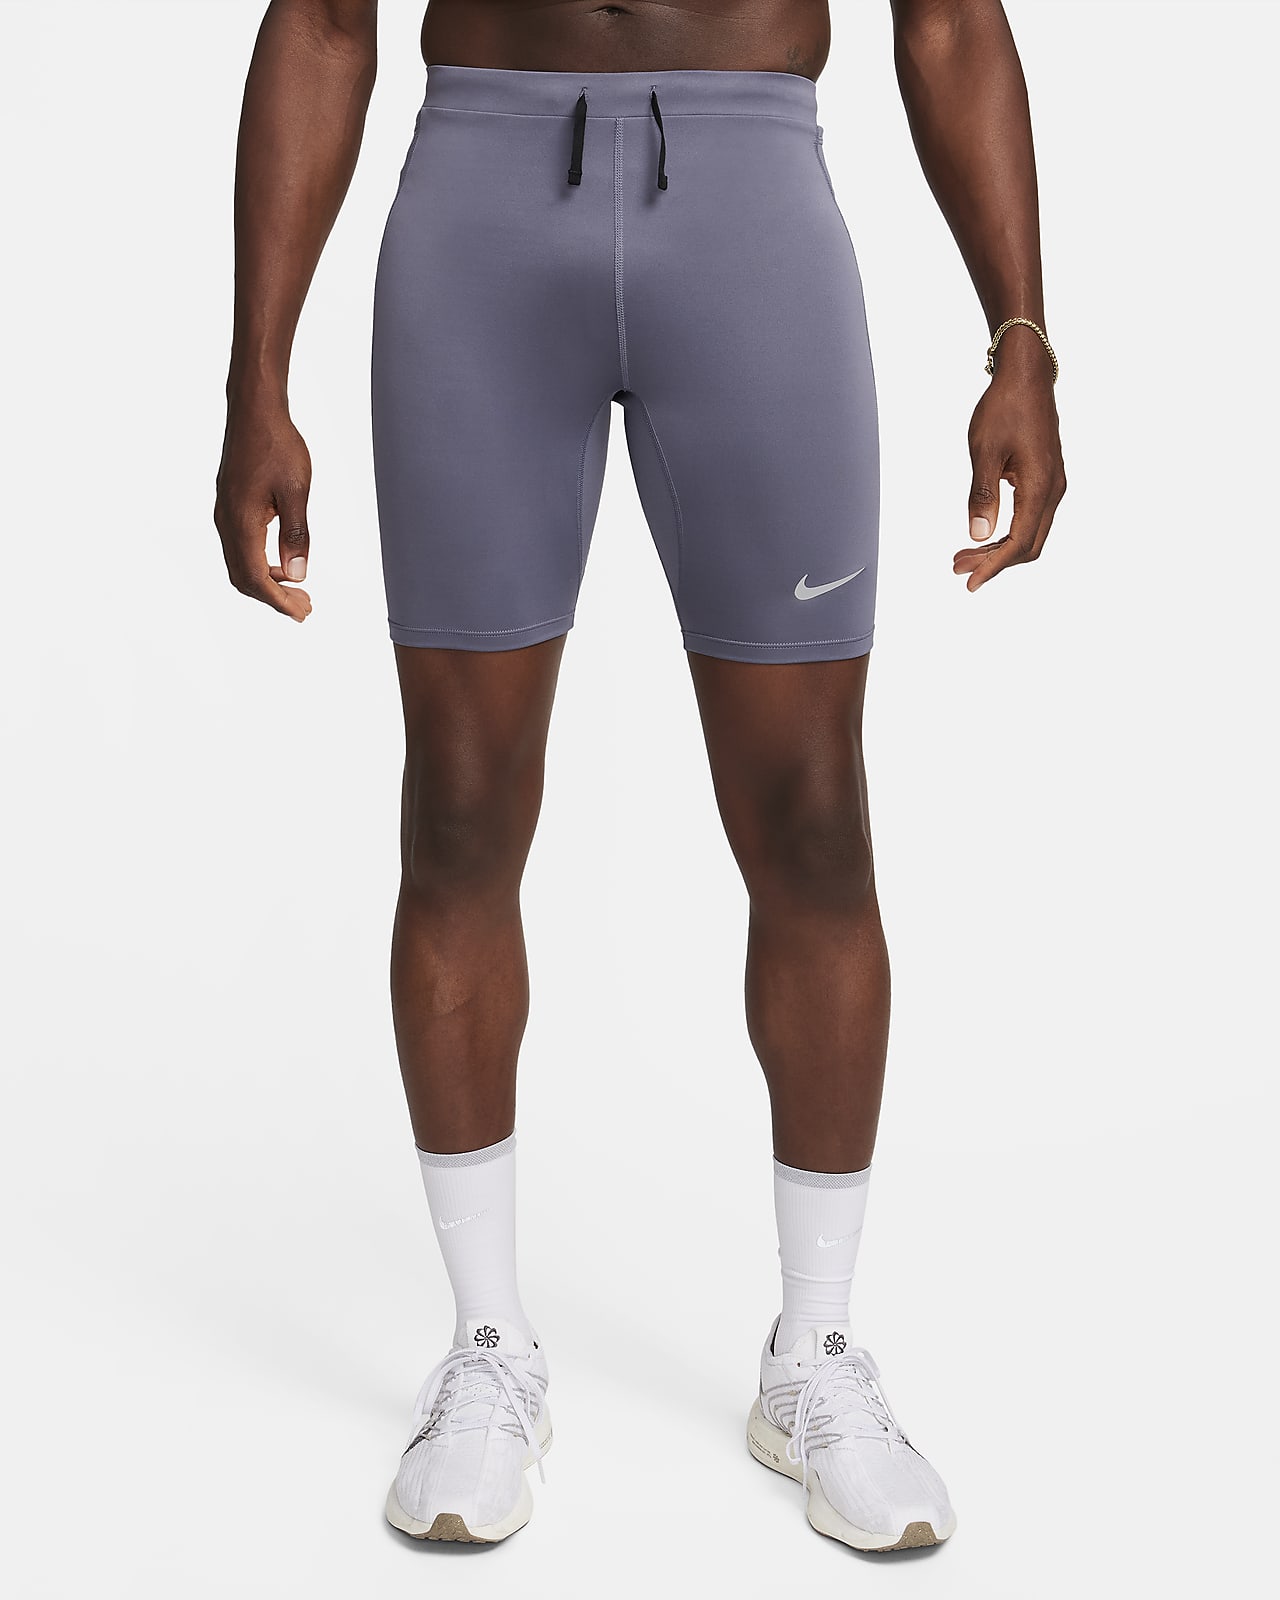 Nike Men's Flex 2 In 1 Yoga Shorts